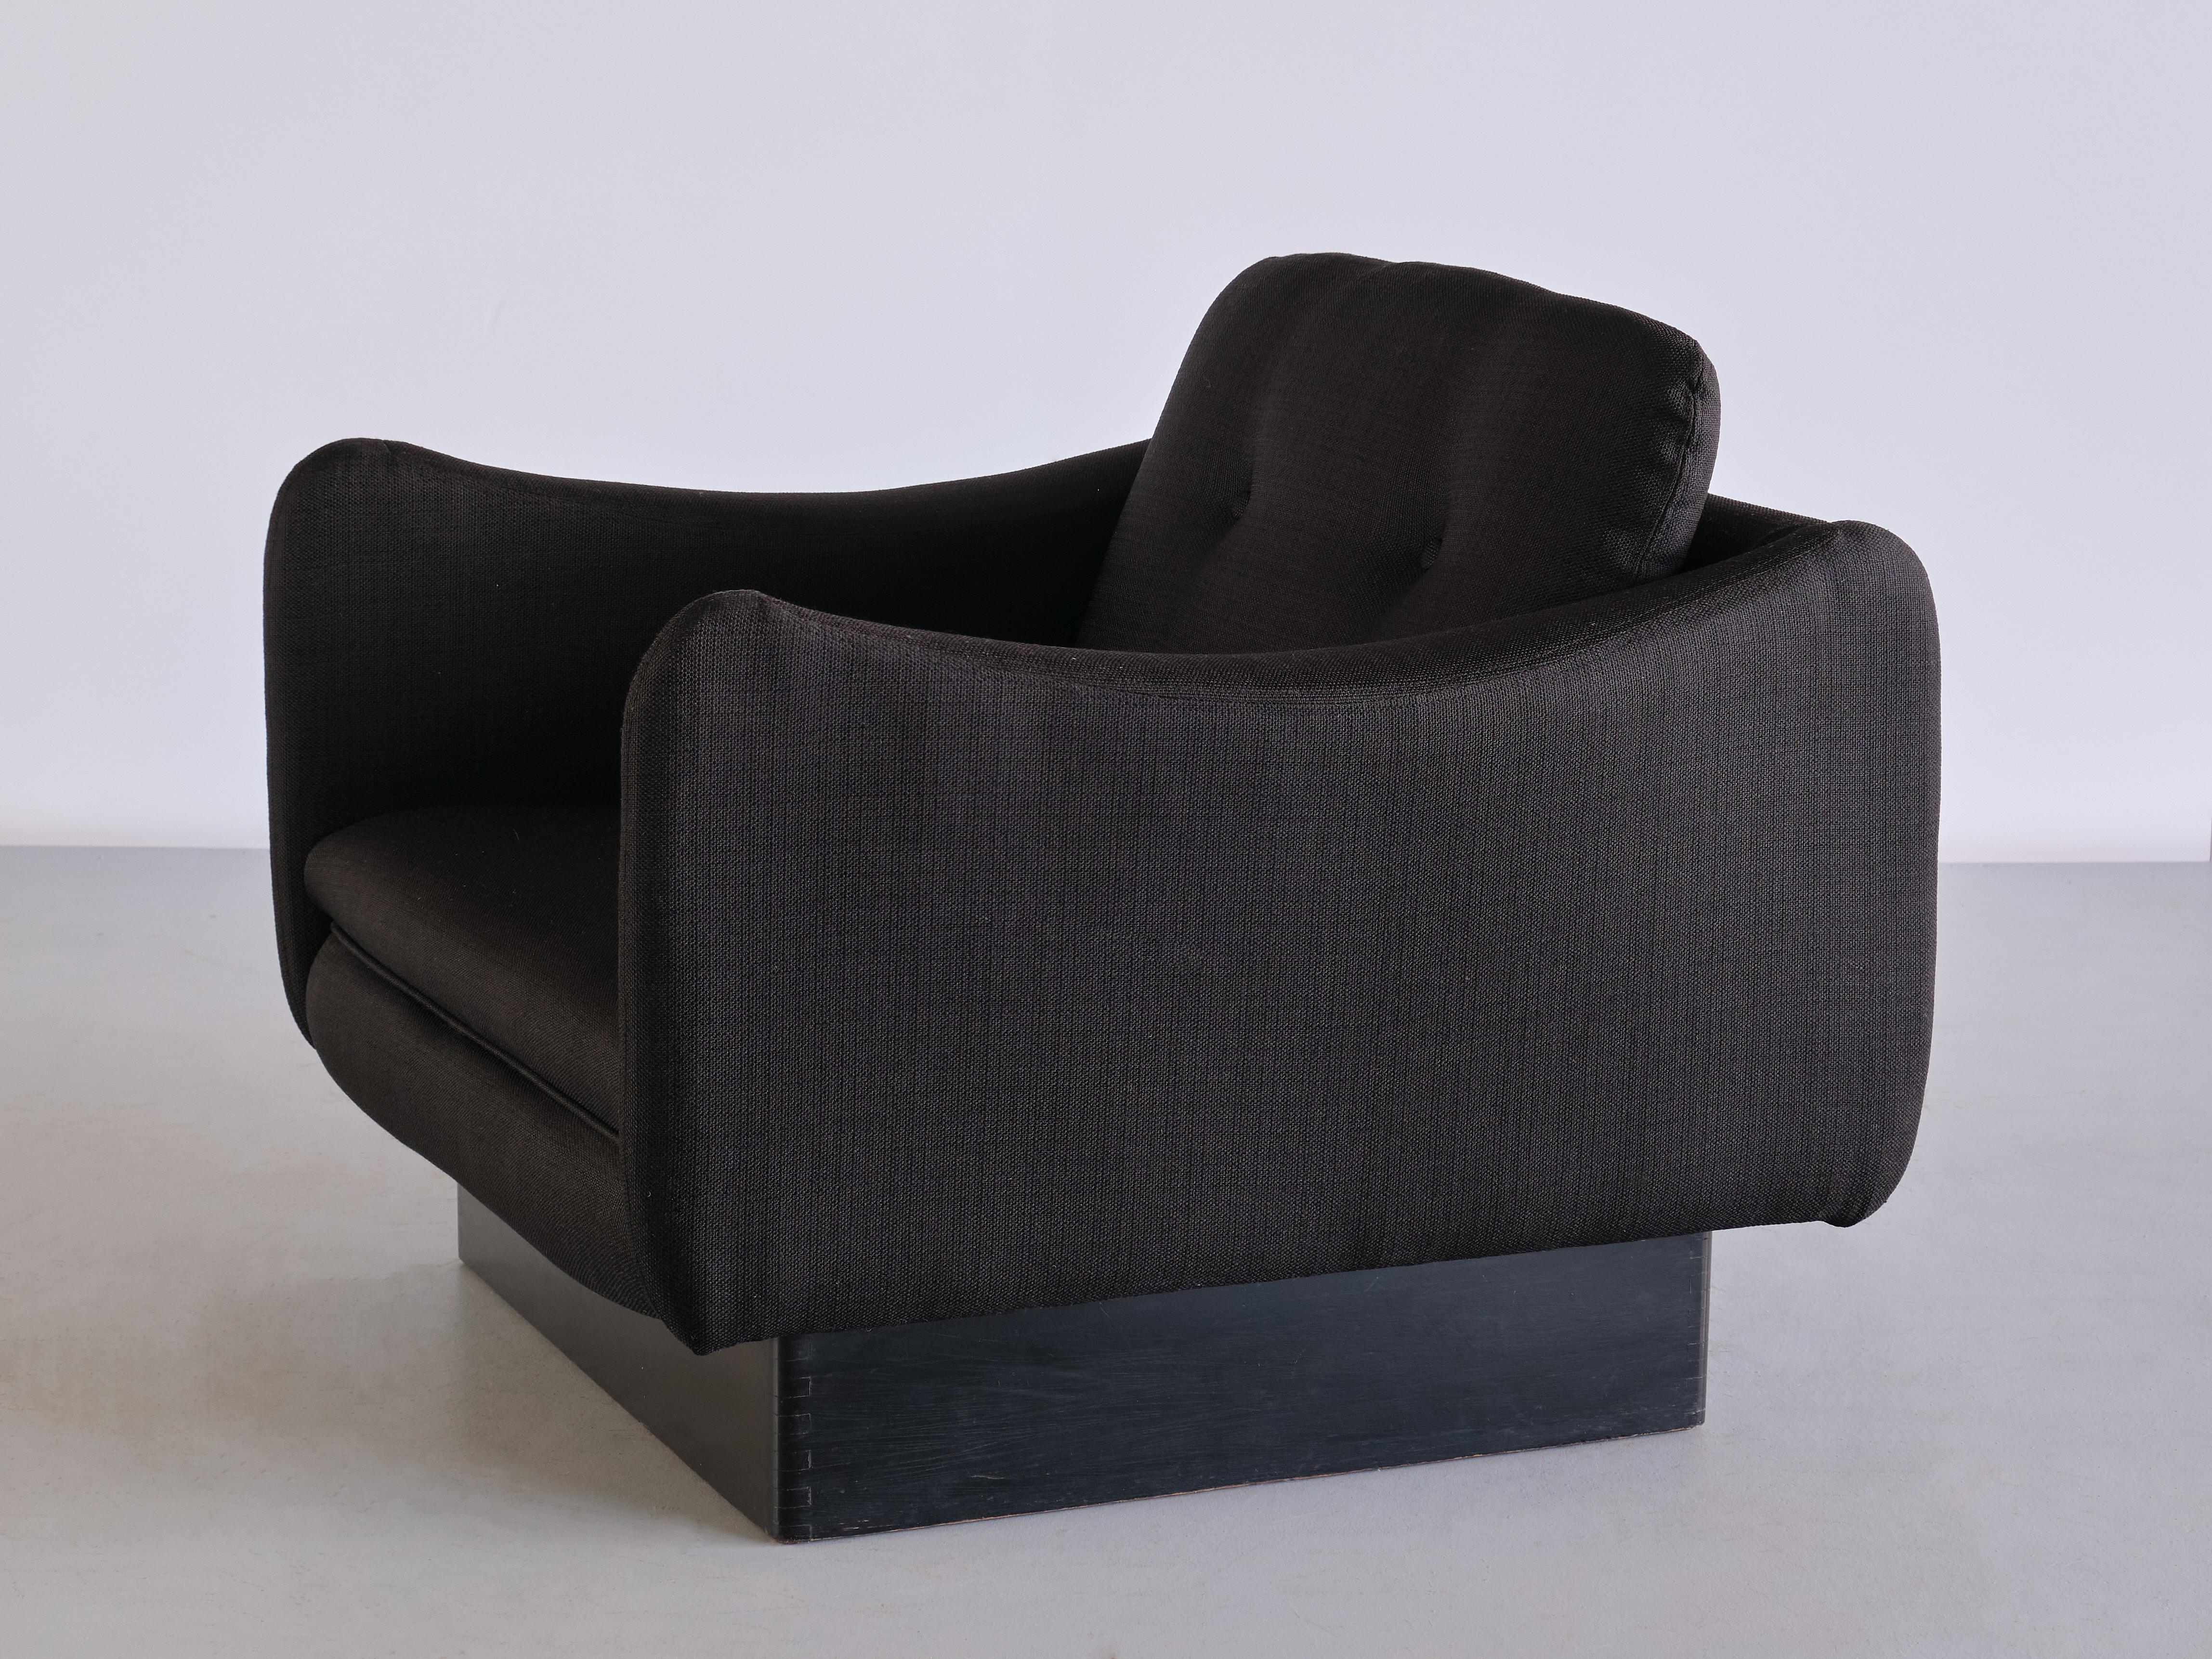 Michel Mortier 'Teckel' Lounge Chair in Black Wool & Wood, Steiner, France, 1963 For Sale 1